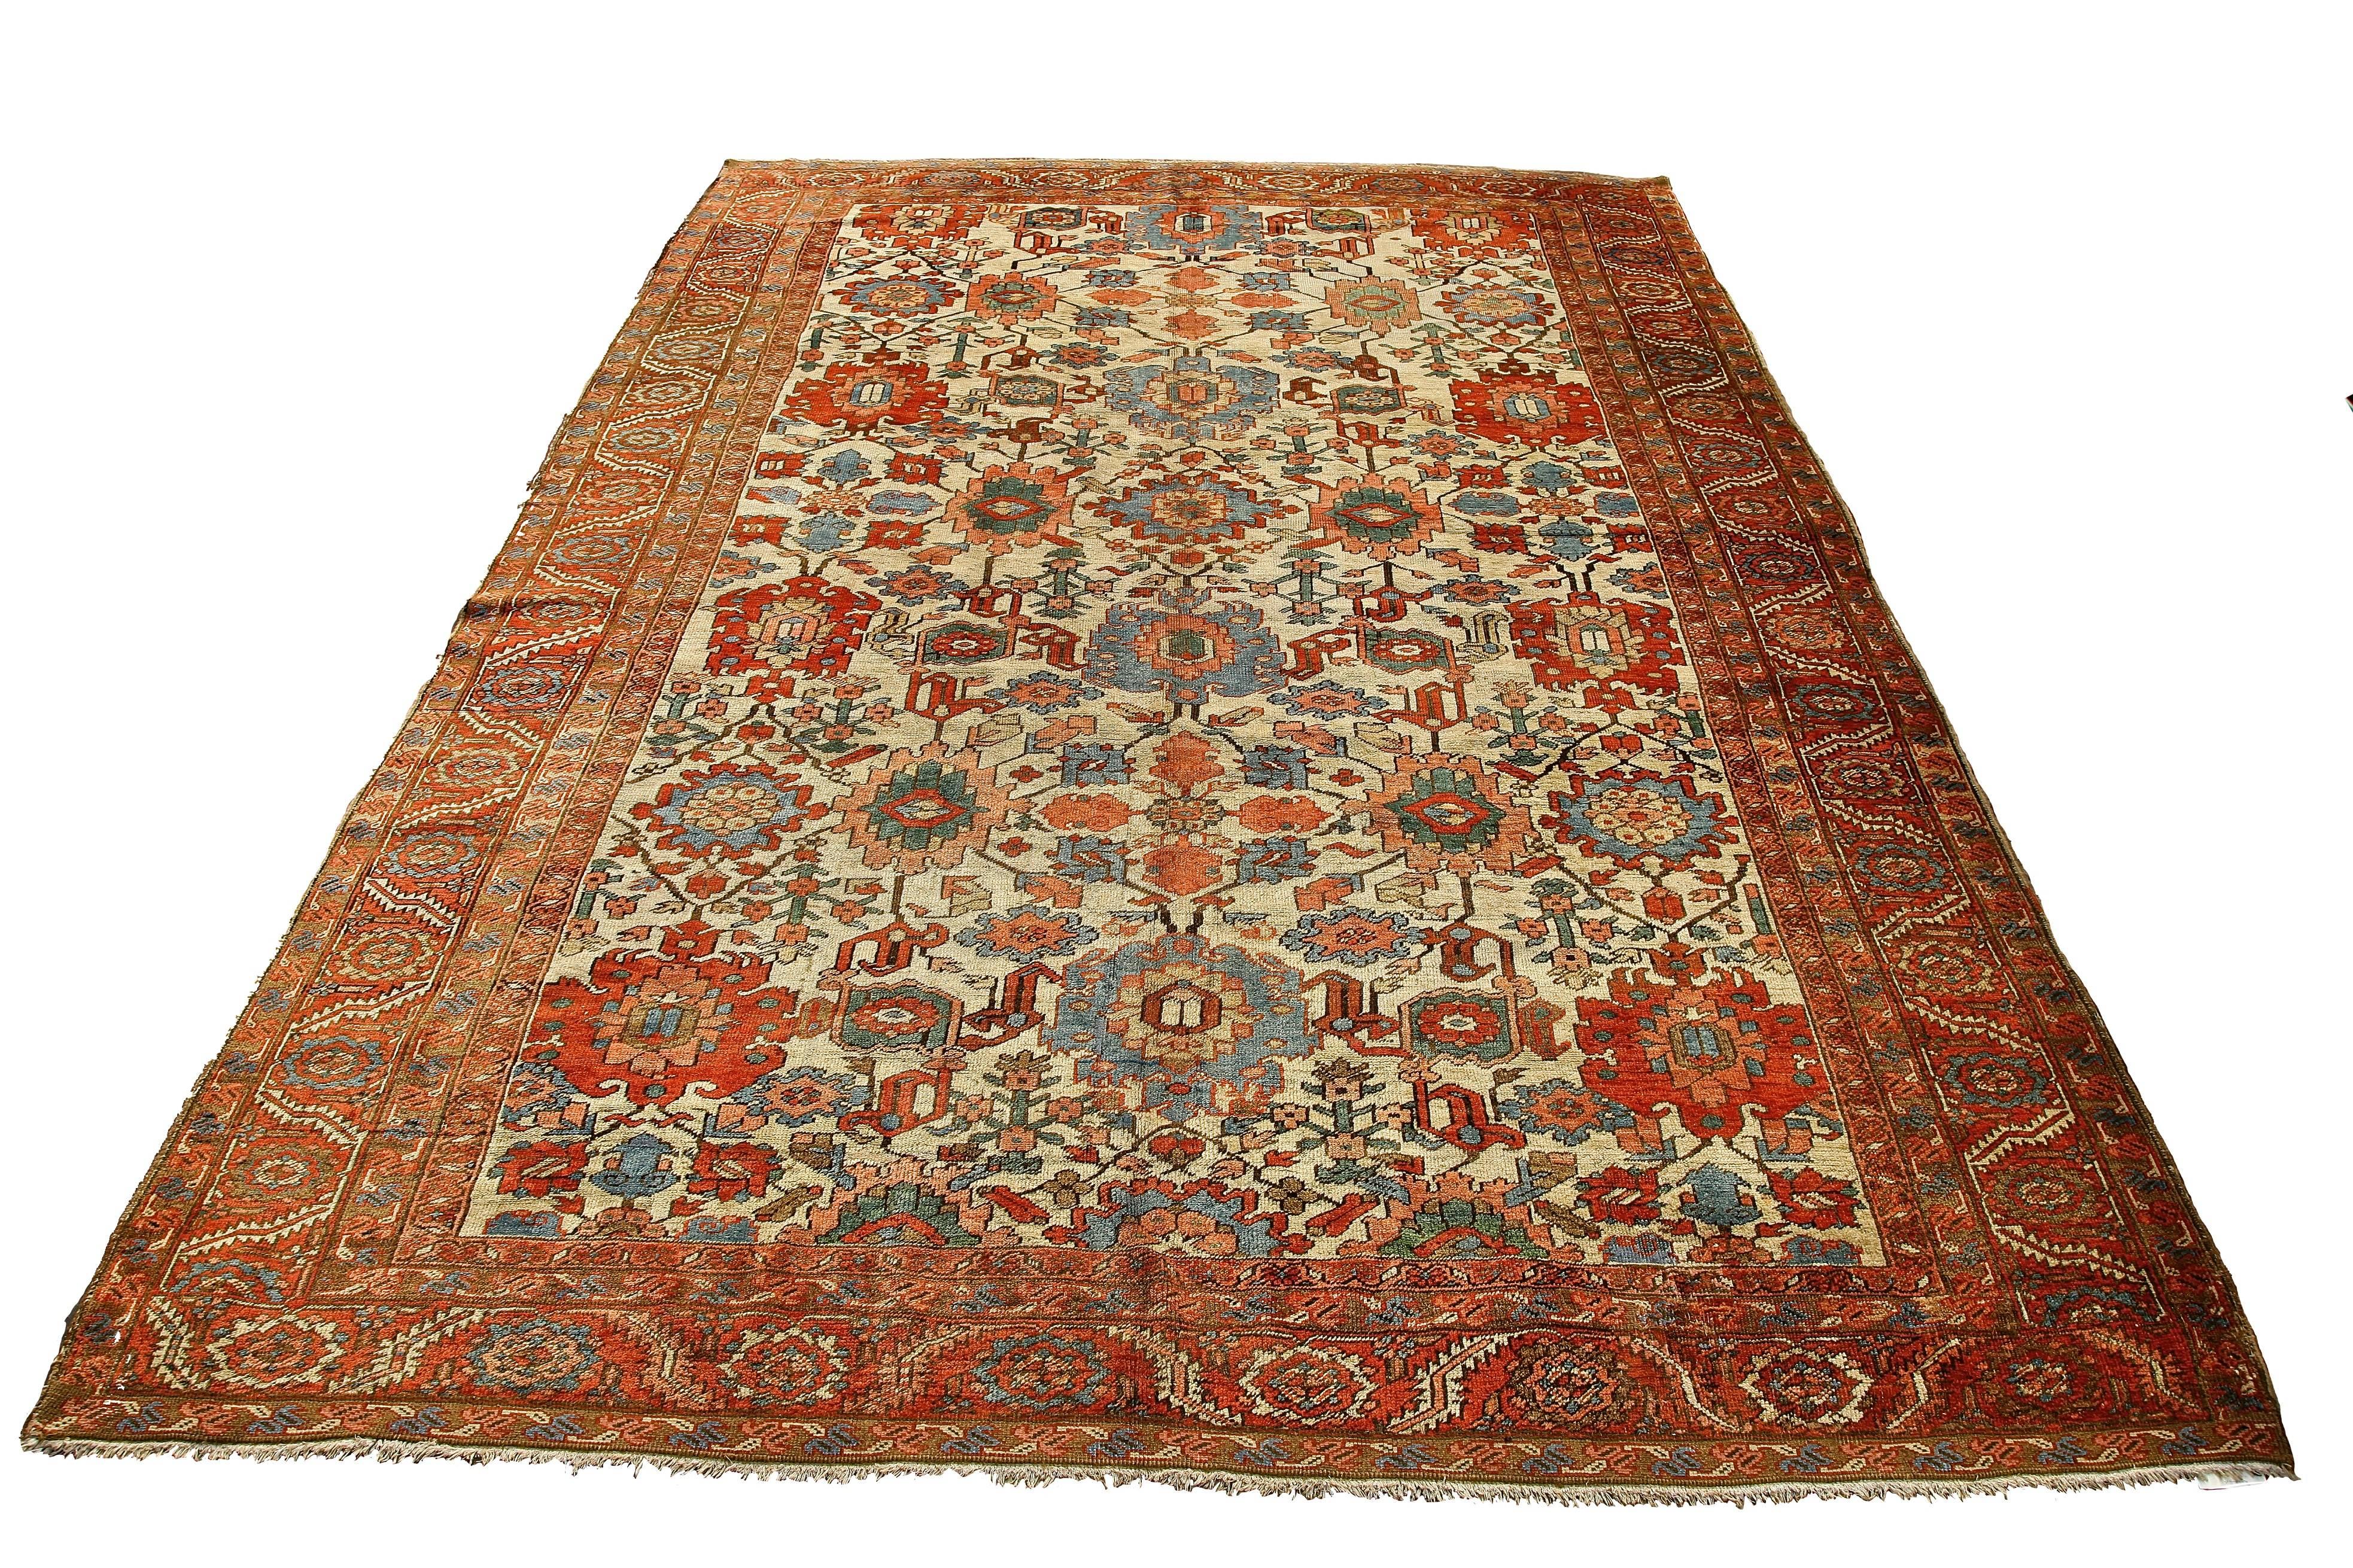 Antique North West Persian Bakshayesh carpet, 19th century. Measures: 397 x 290cm.